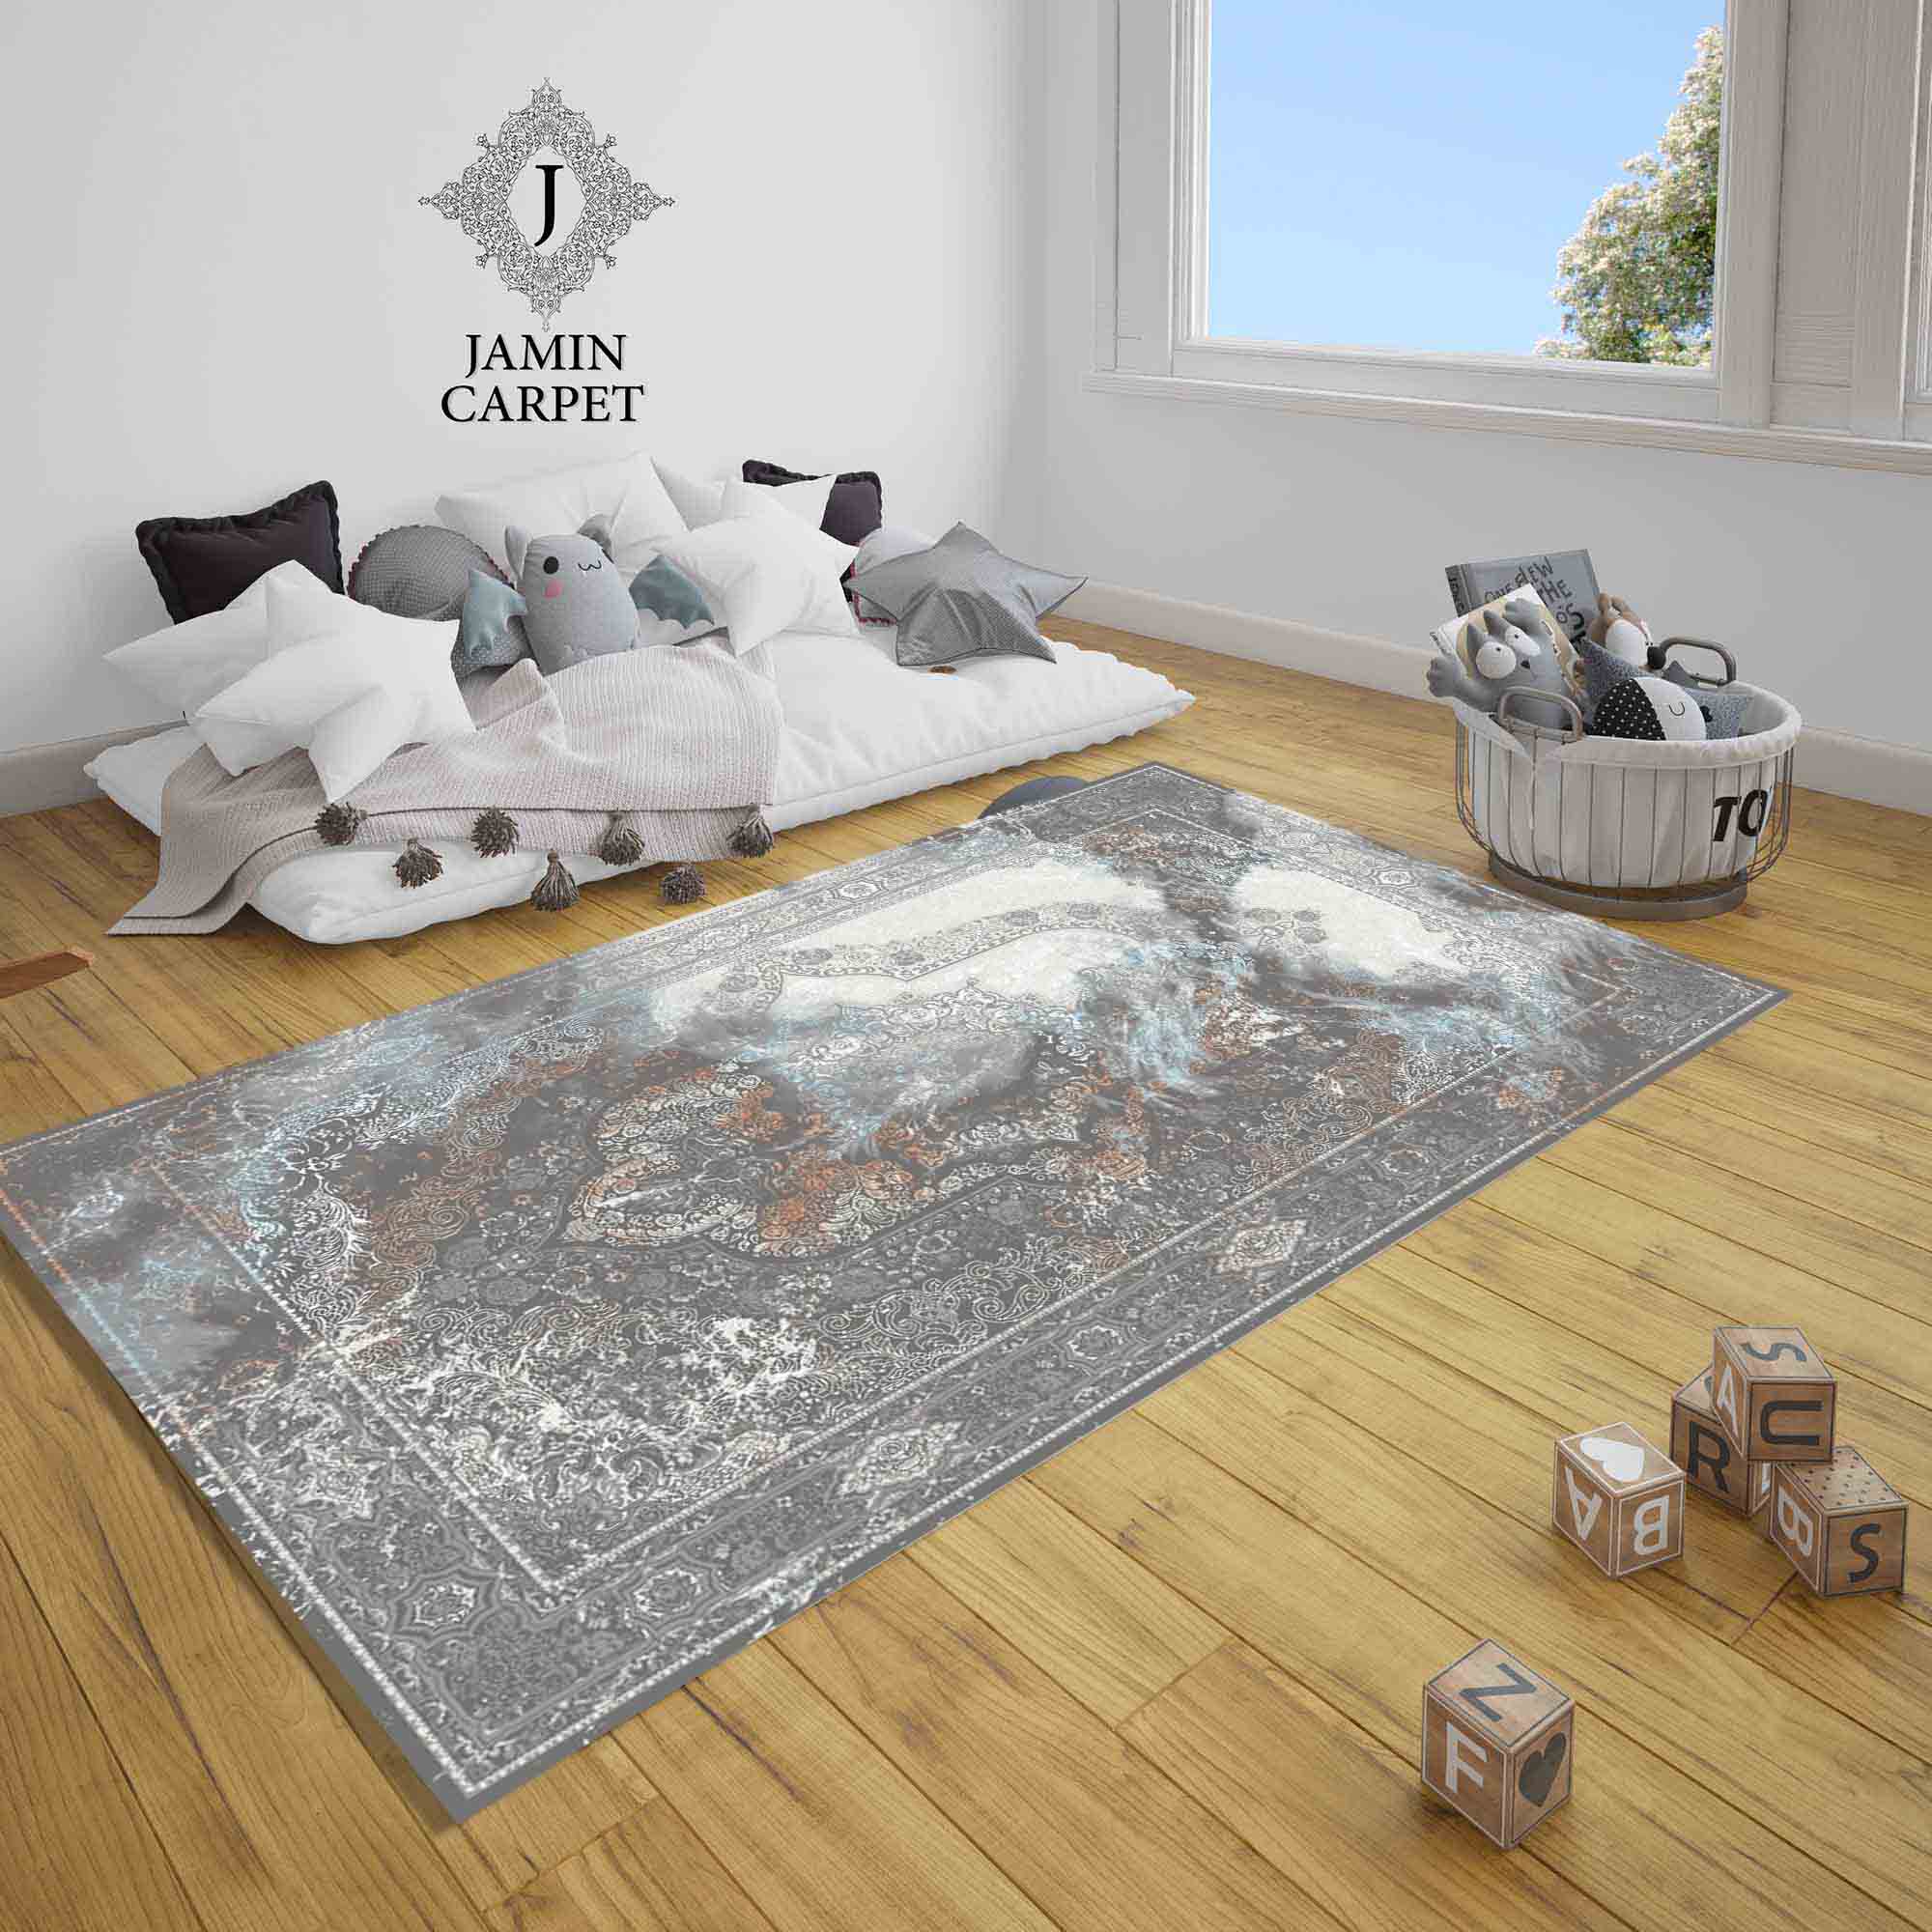 Fantasy carpet code 229 comb 400 density 1800 all acrylic